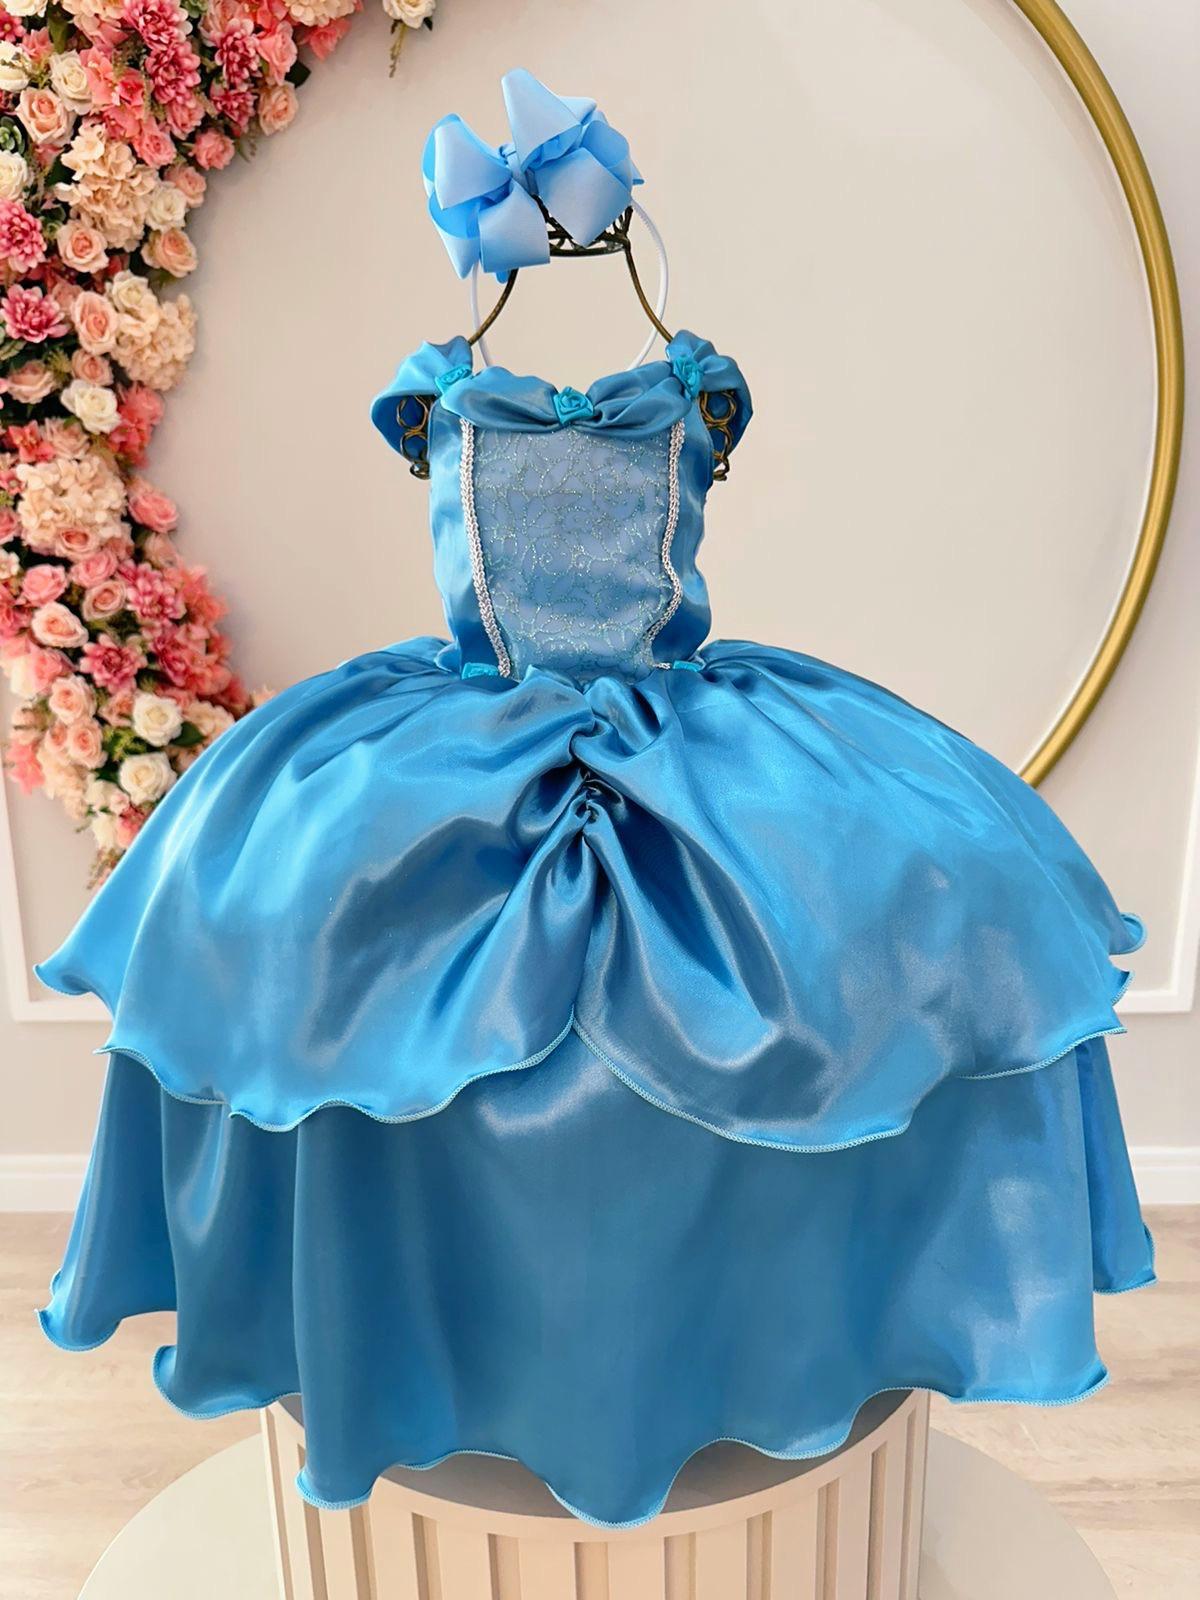 Fantasia Infantil Frozen Cinderela Azul Serenity Tule Brilho